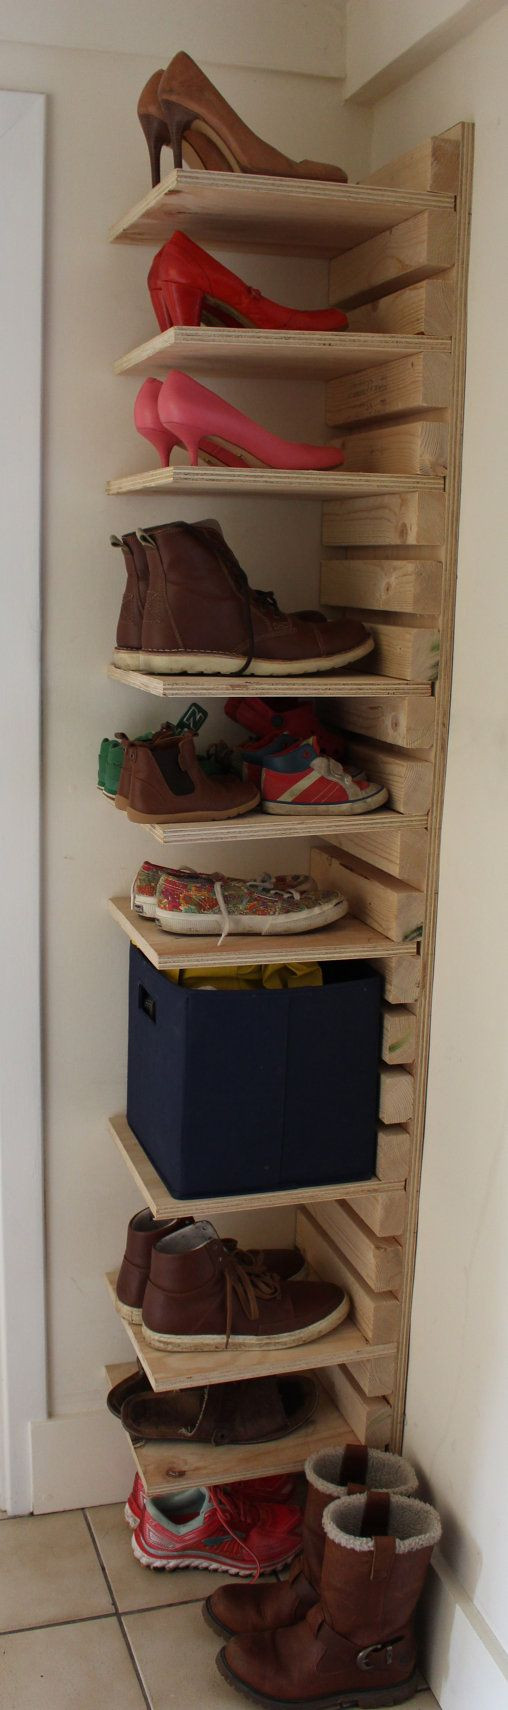 DIY Garage Shoe Rack
 132 best images about Shelf Ideas on Pinterest